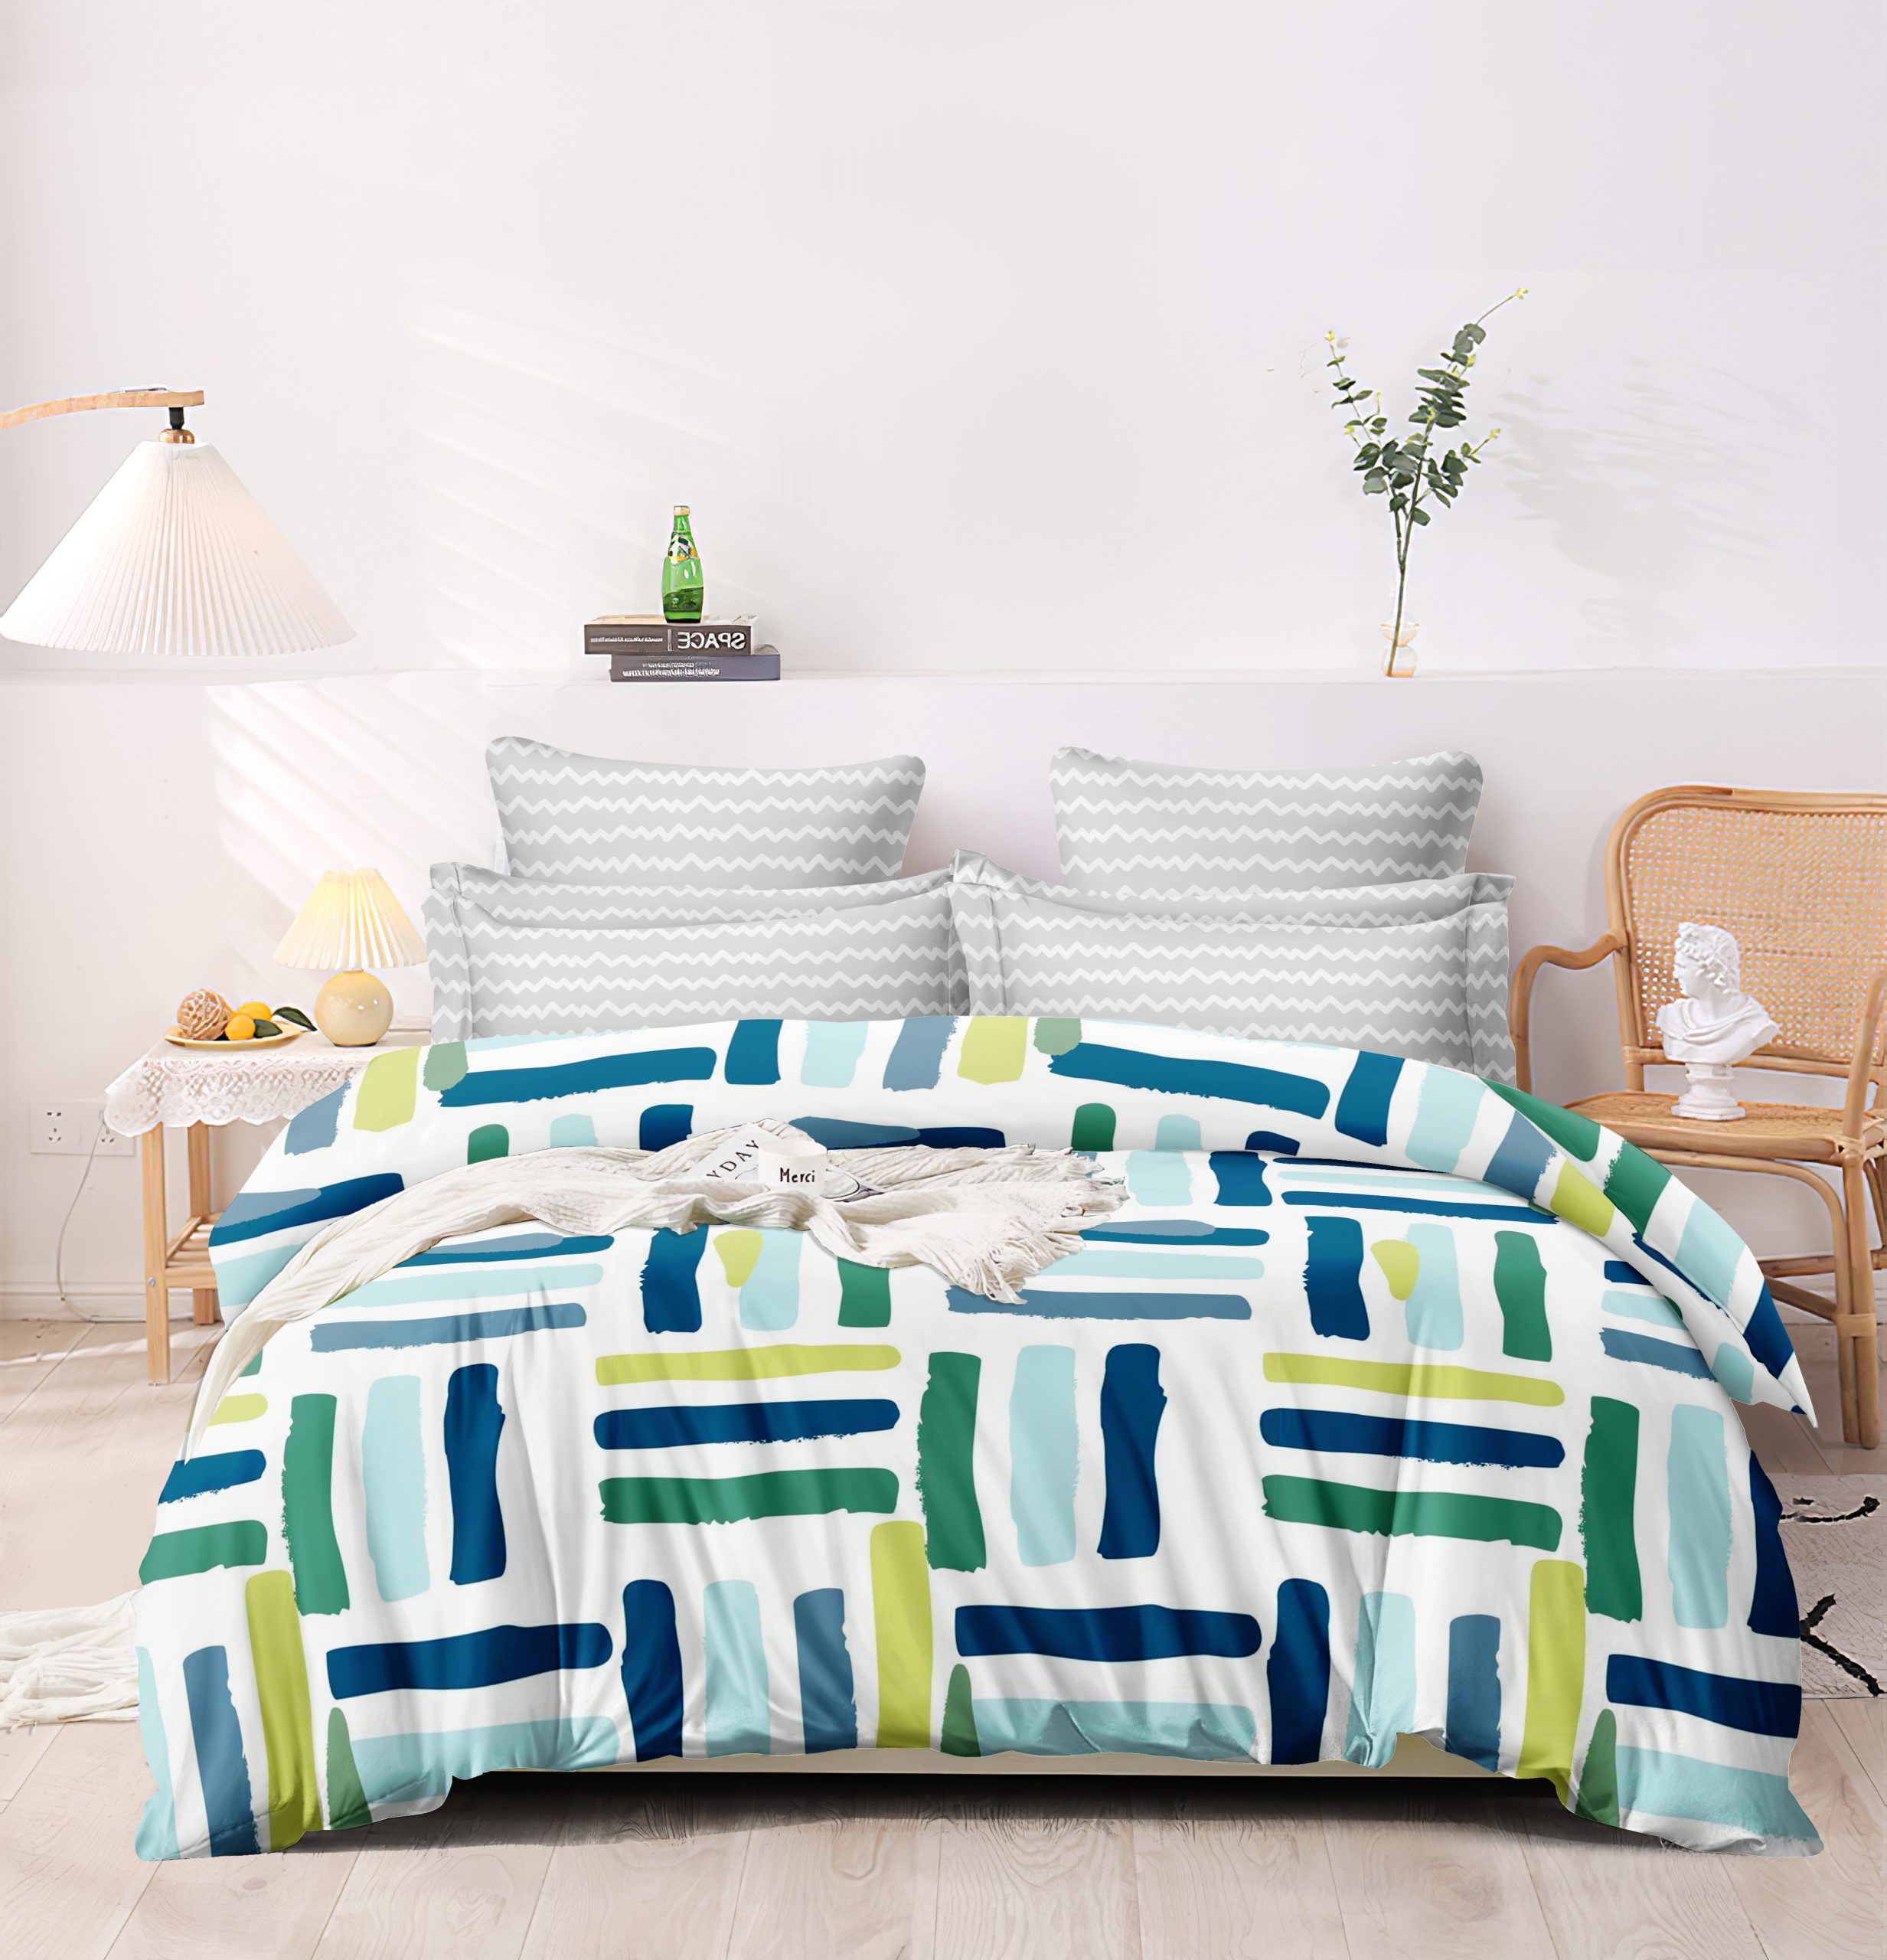 Homewards Geometric Striped Double Bed Comforter – Blue Lemon Yellow